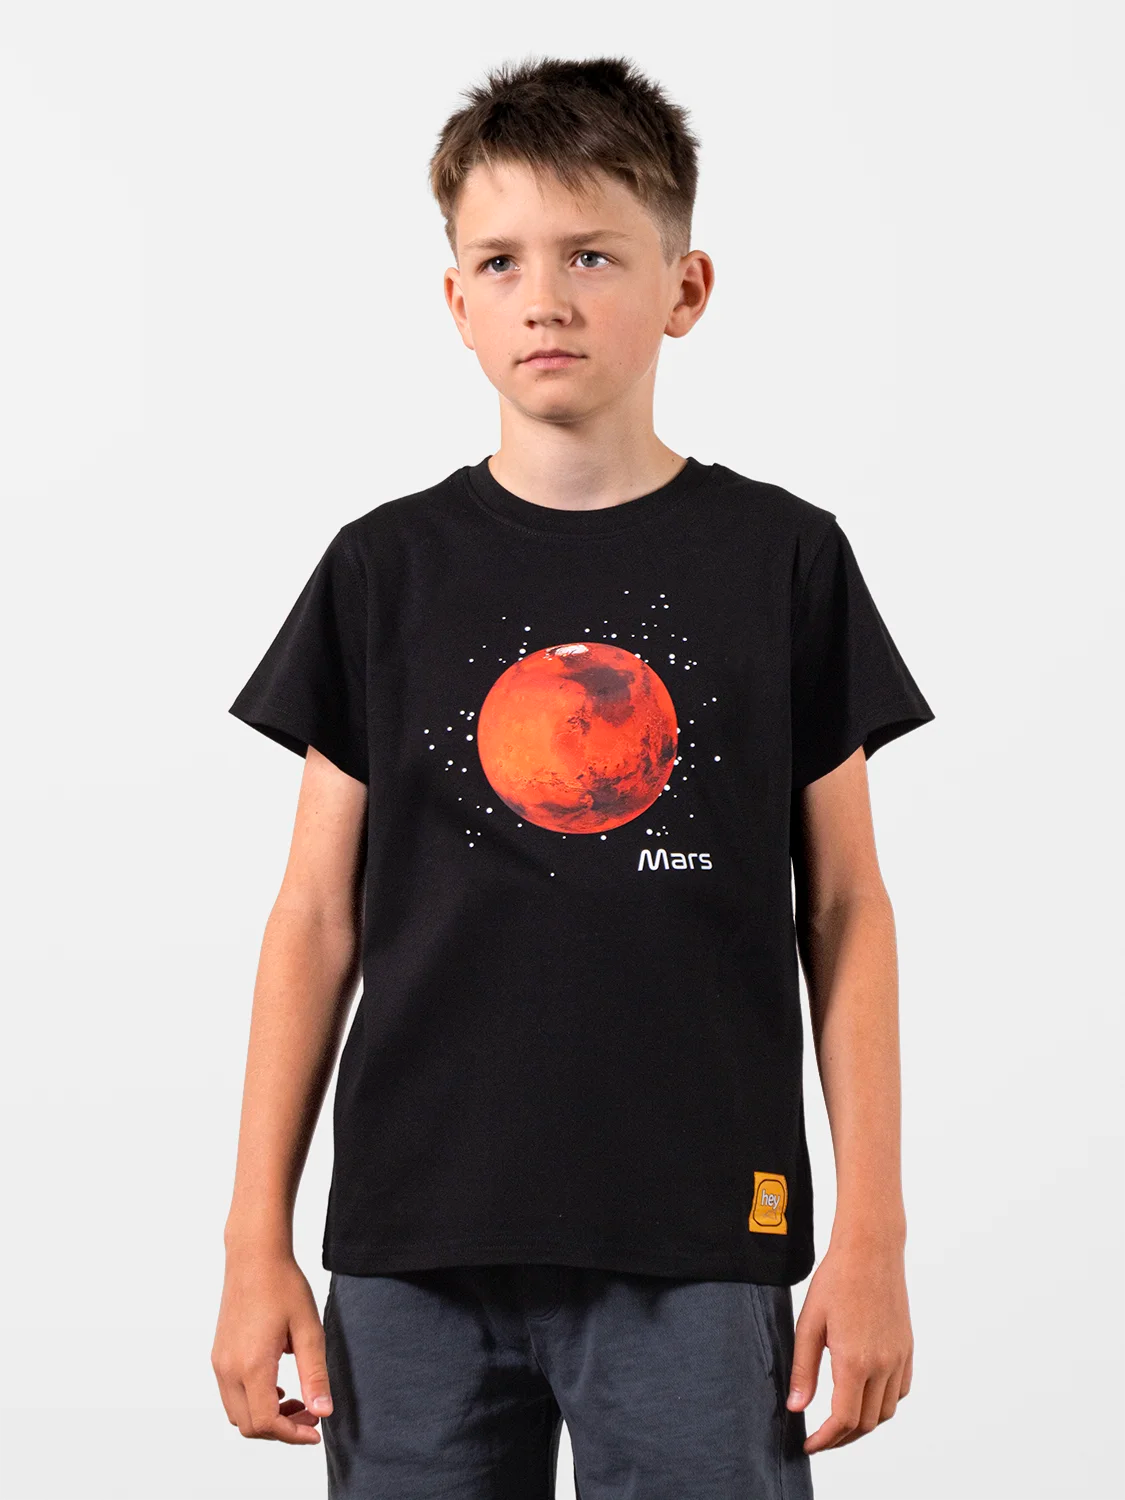 Mars Starring Perfect Black T-shirt